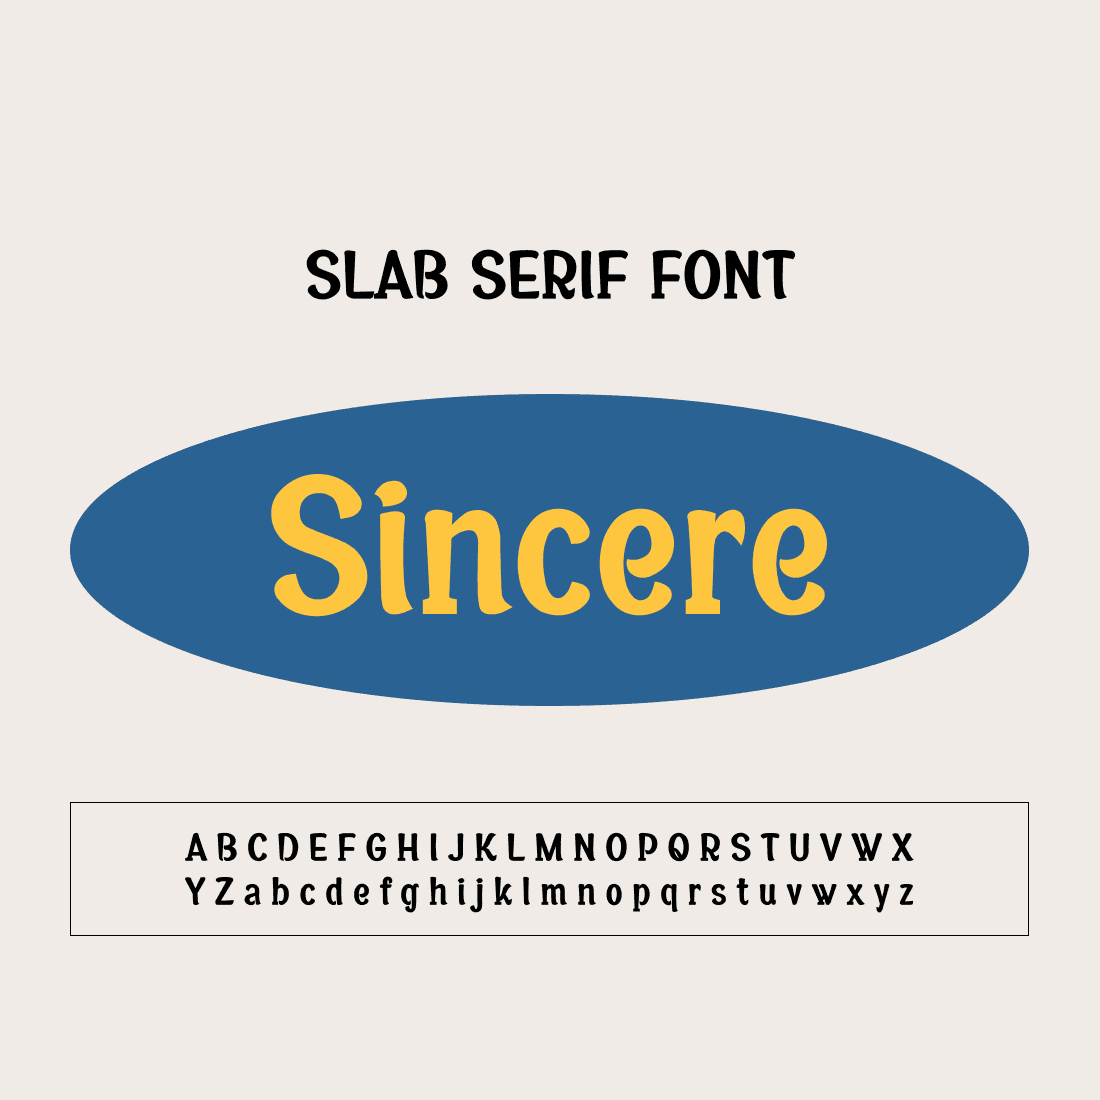 Sincere Slab Serif Font main cover by MasterBundles.